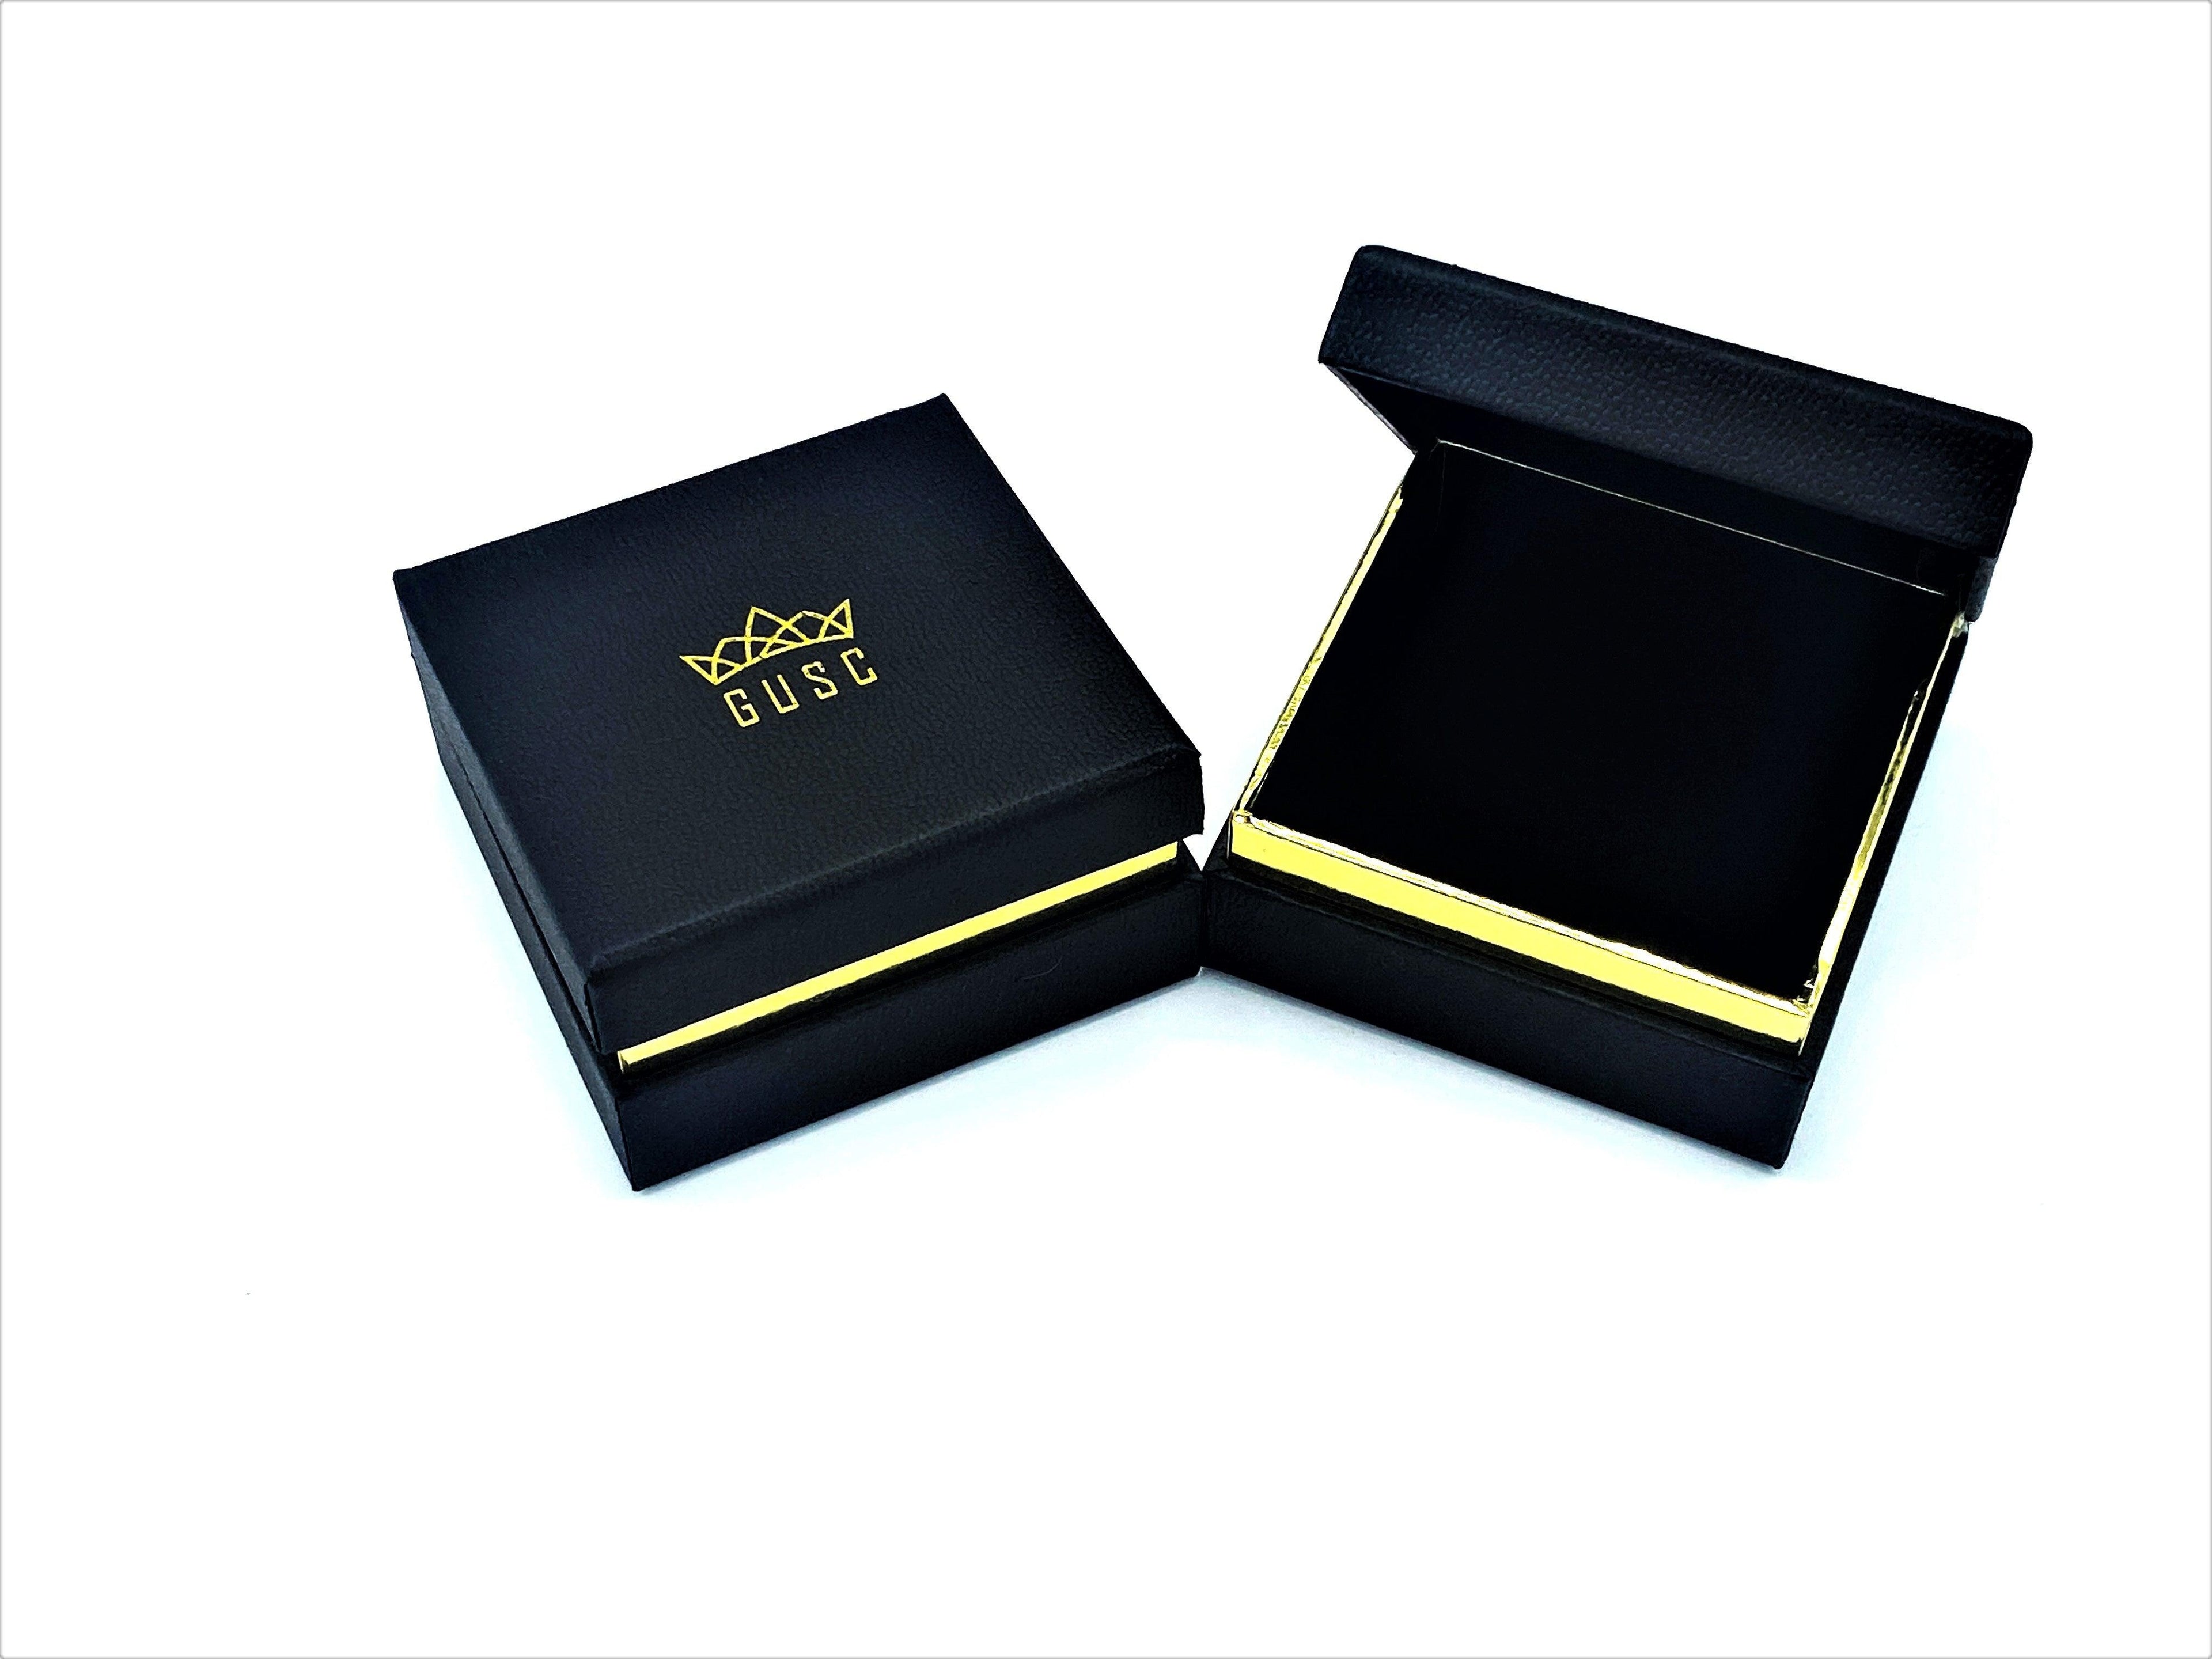 18K Gold Bracelet - GUSC